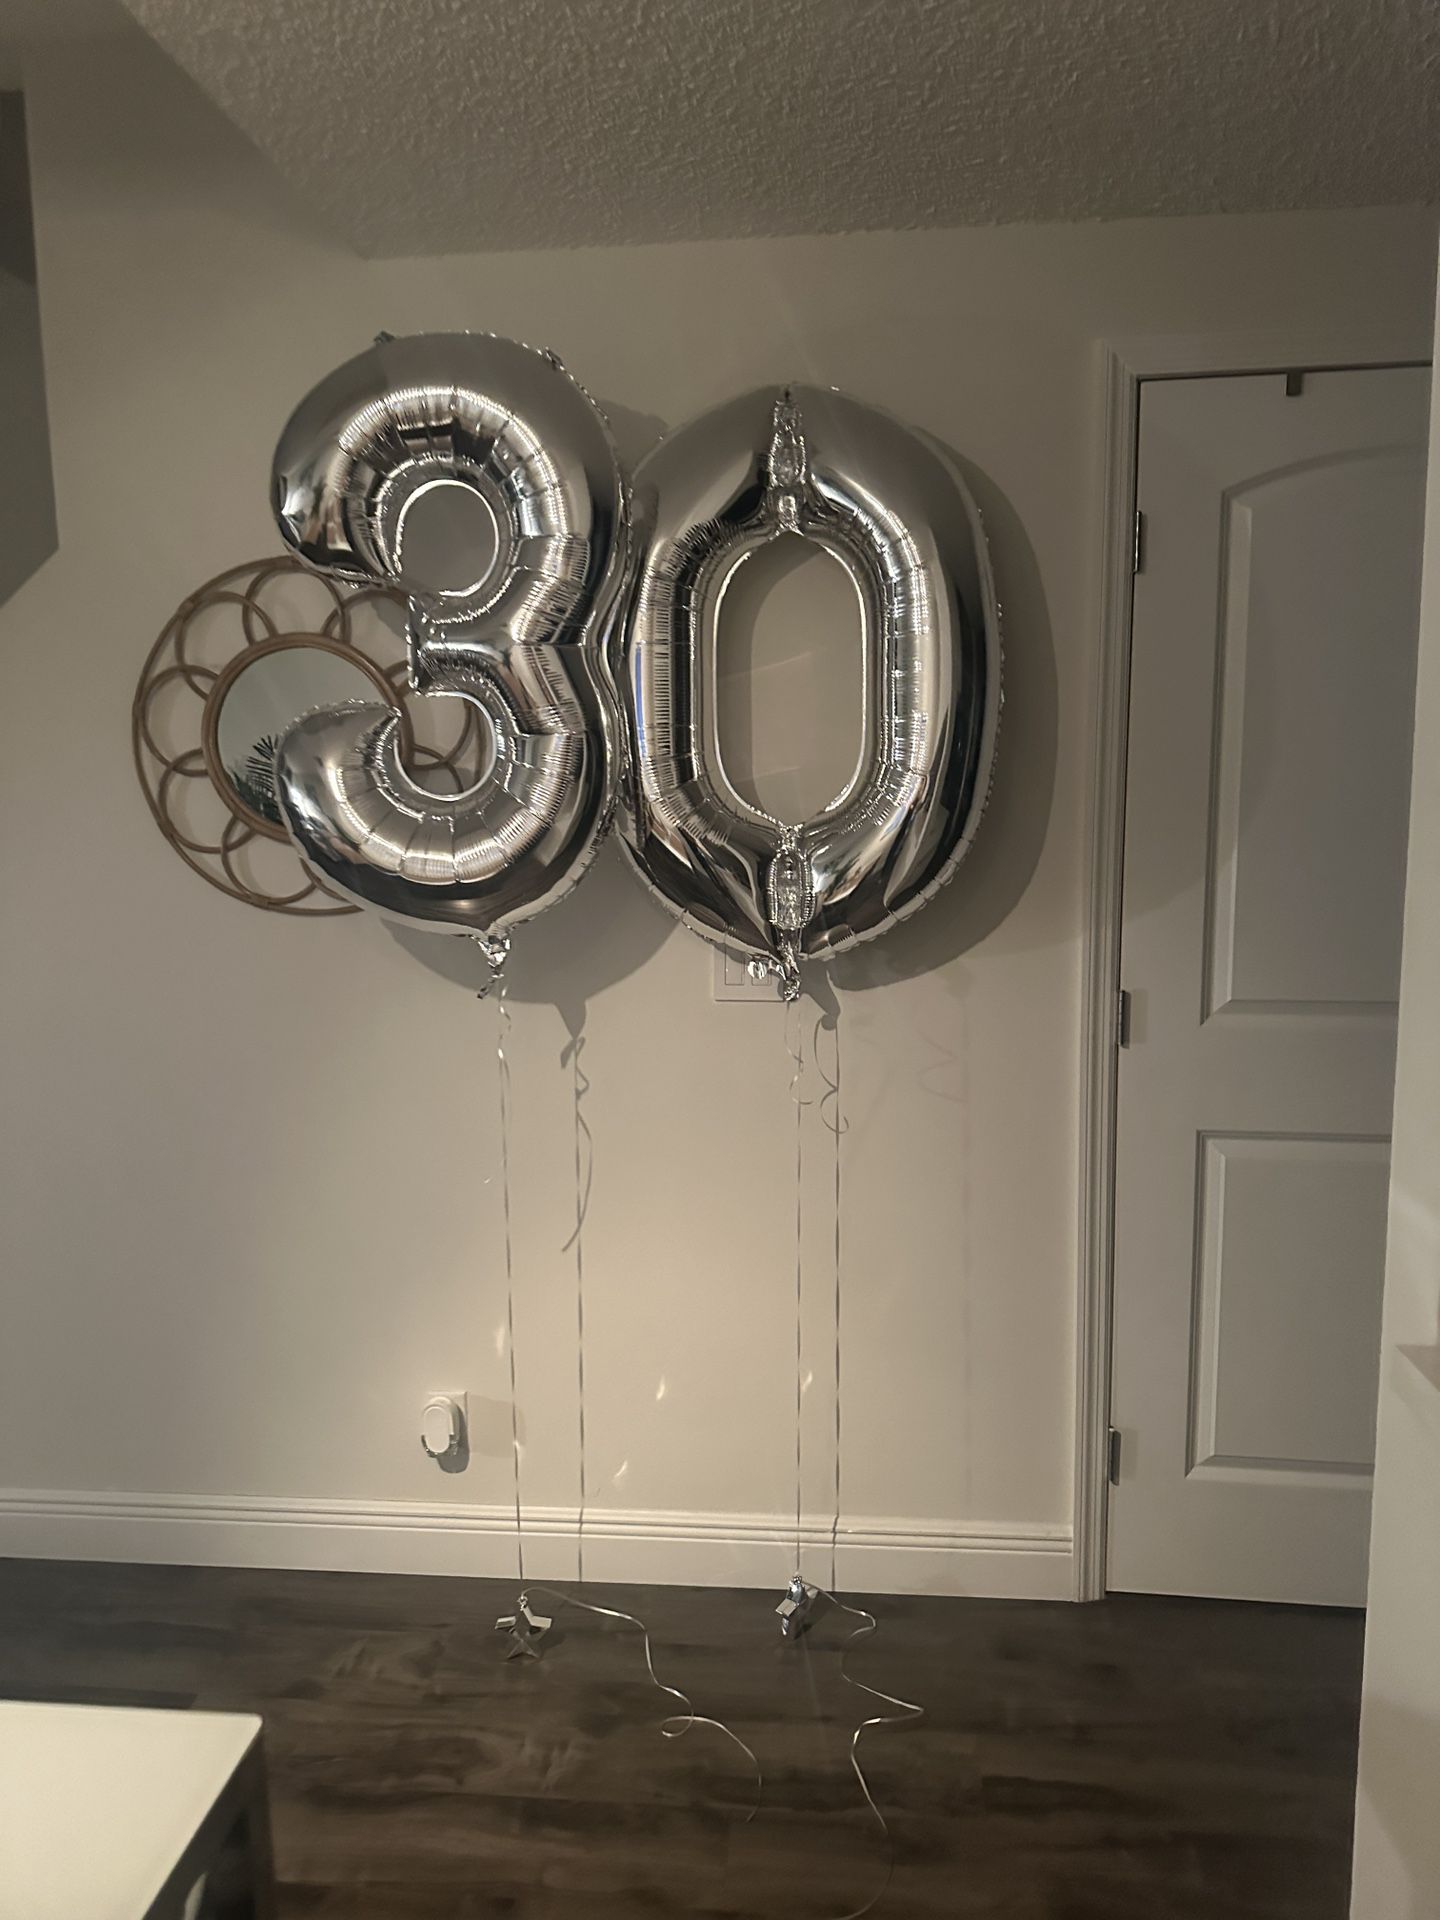 Silver helium balloons 30